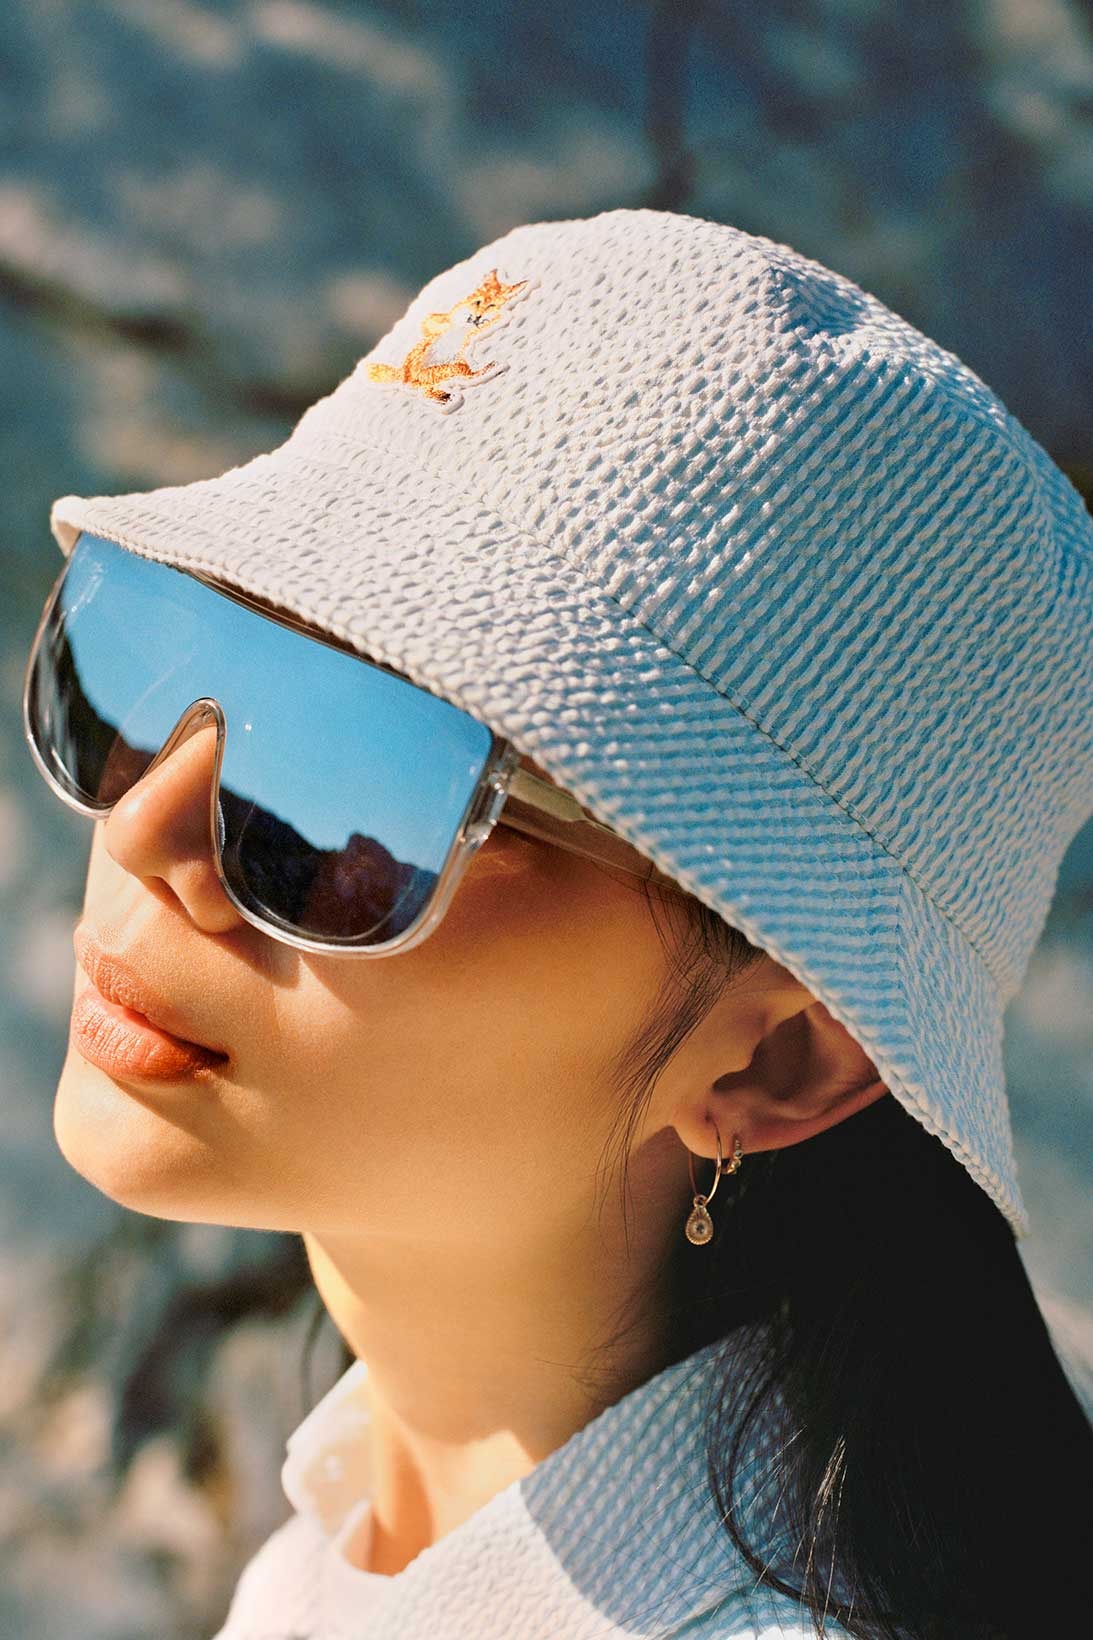 maison kitsune helinox chillax fox heart of summer collaboration bucket hat shades sunglasses